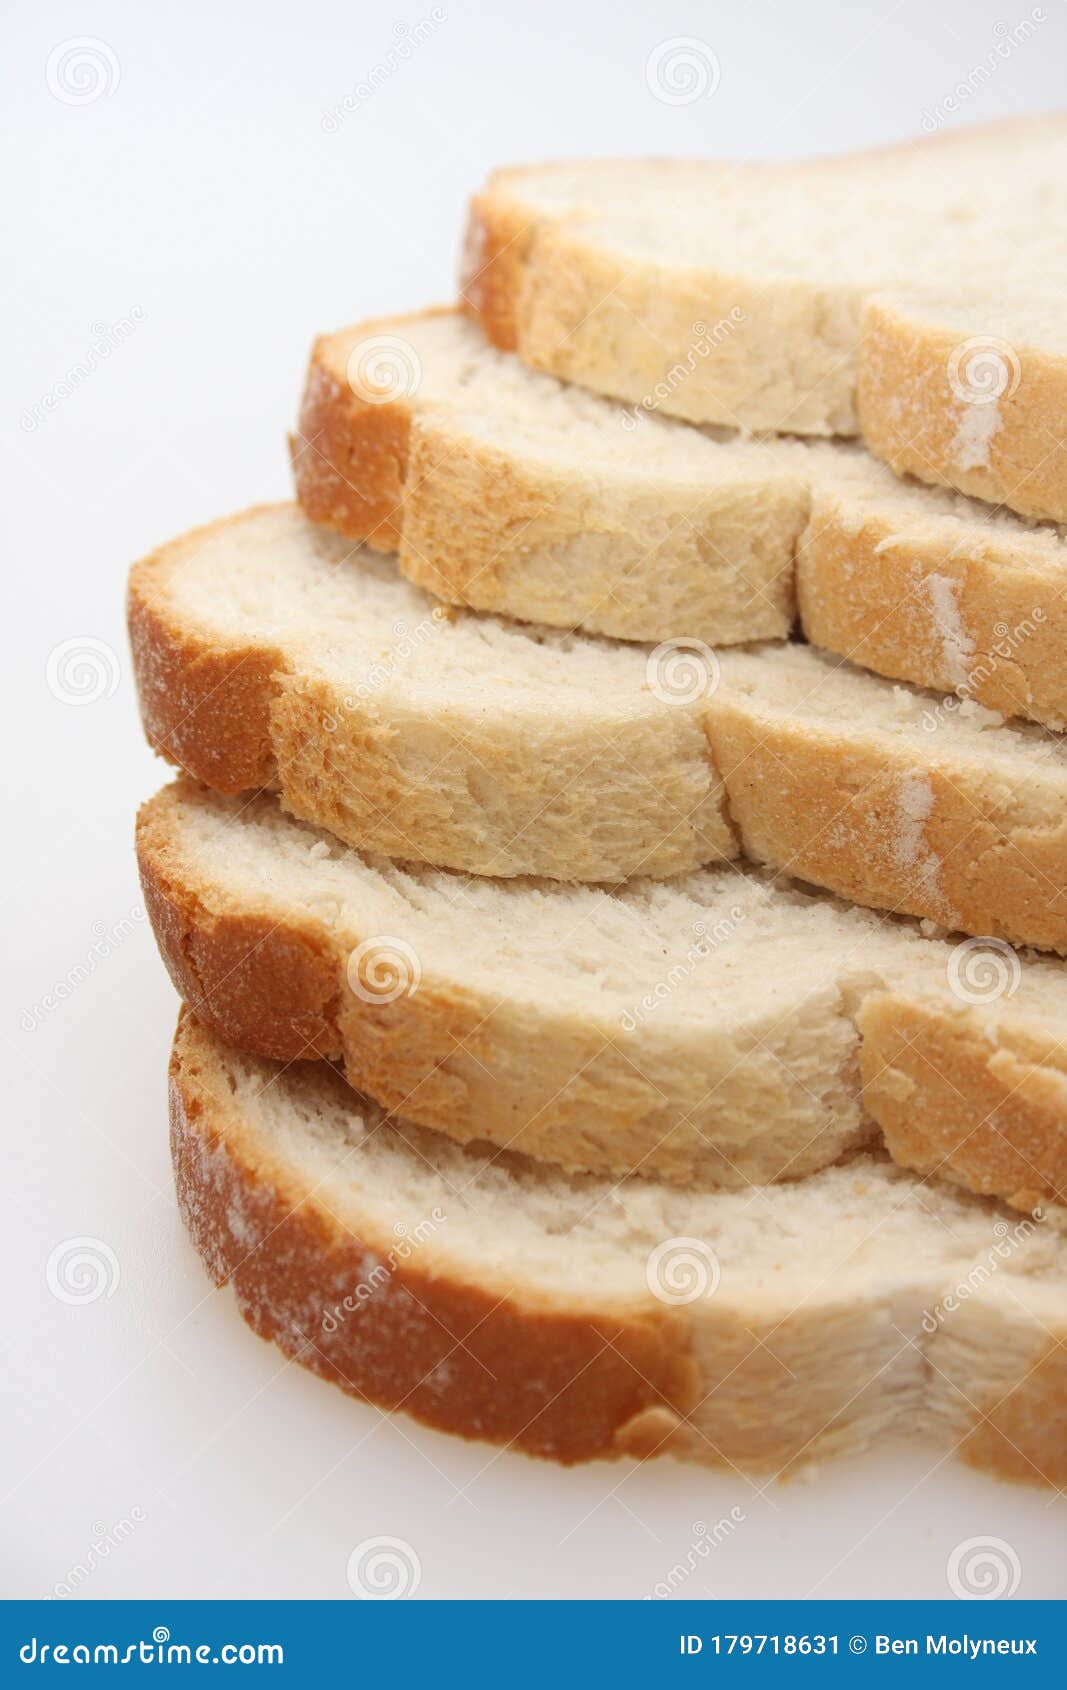 a studio photograph of 5 slices of white bread